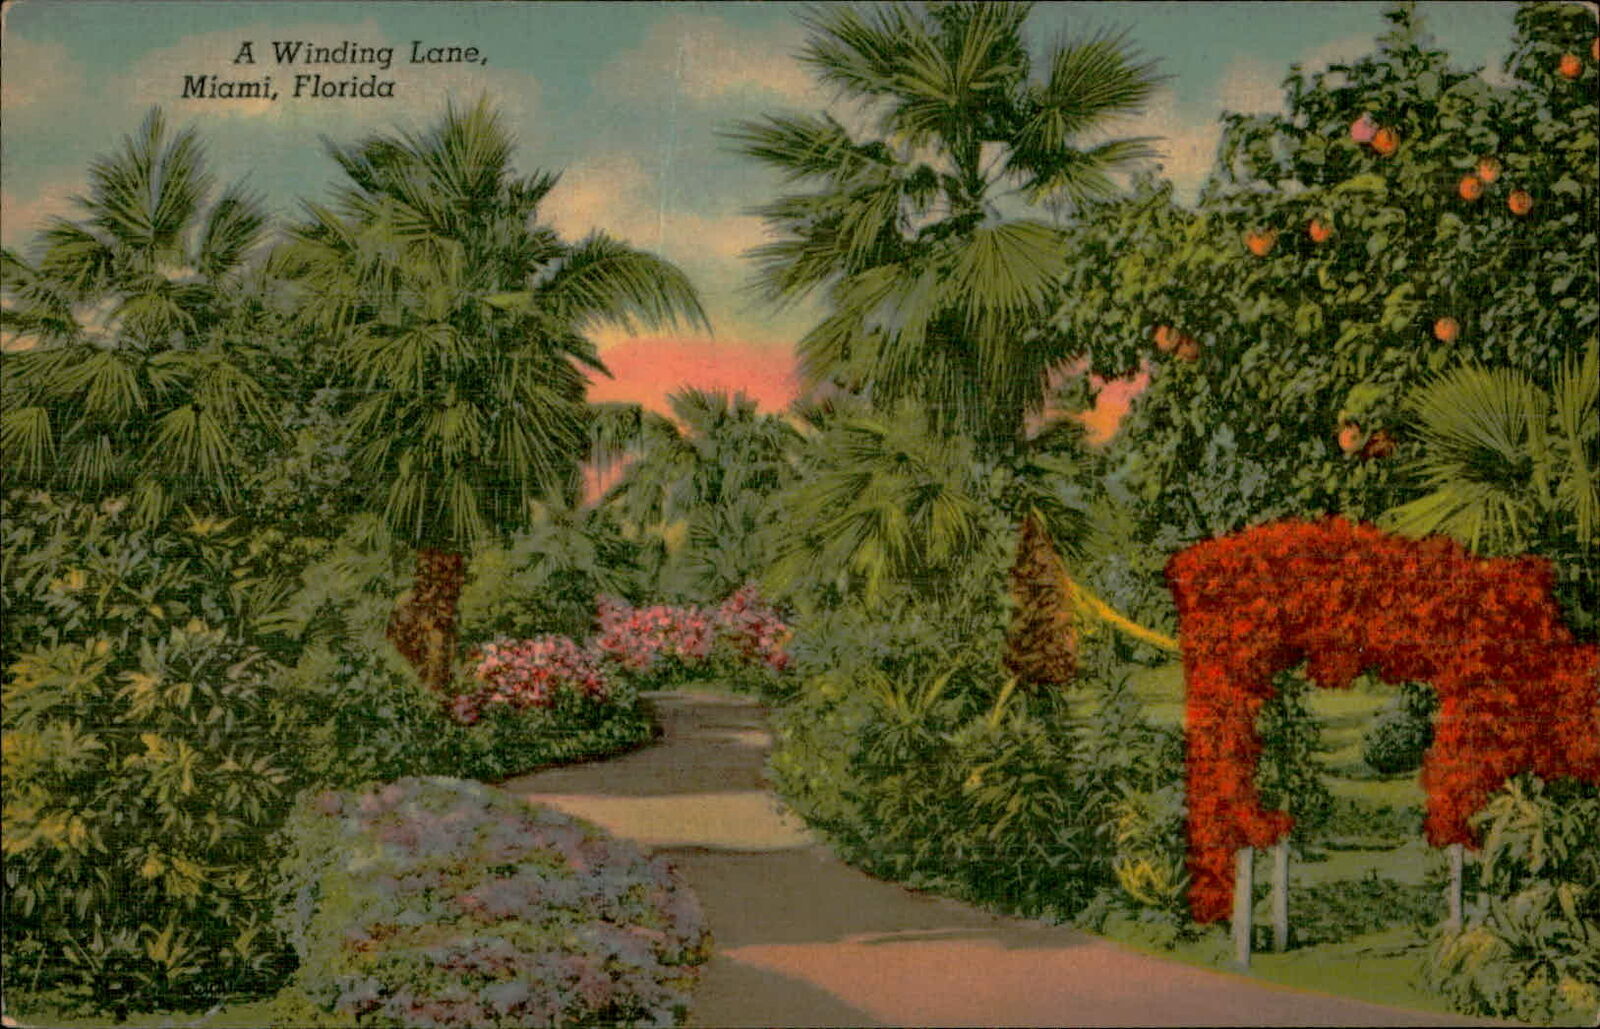 Postcard: A Winding Lane, Miami, Florida